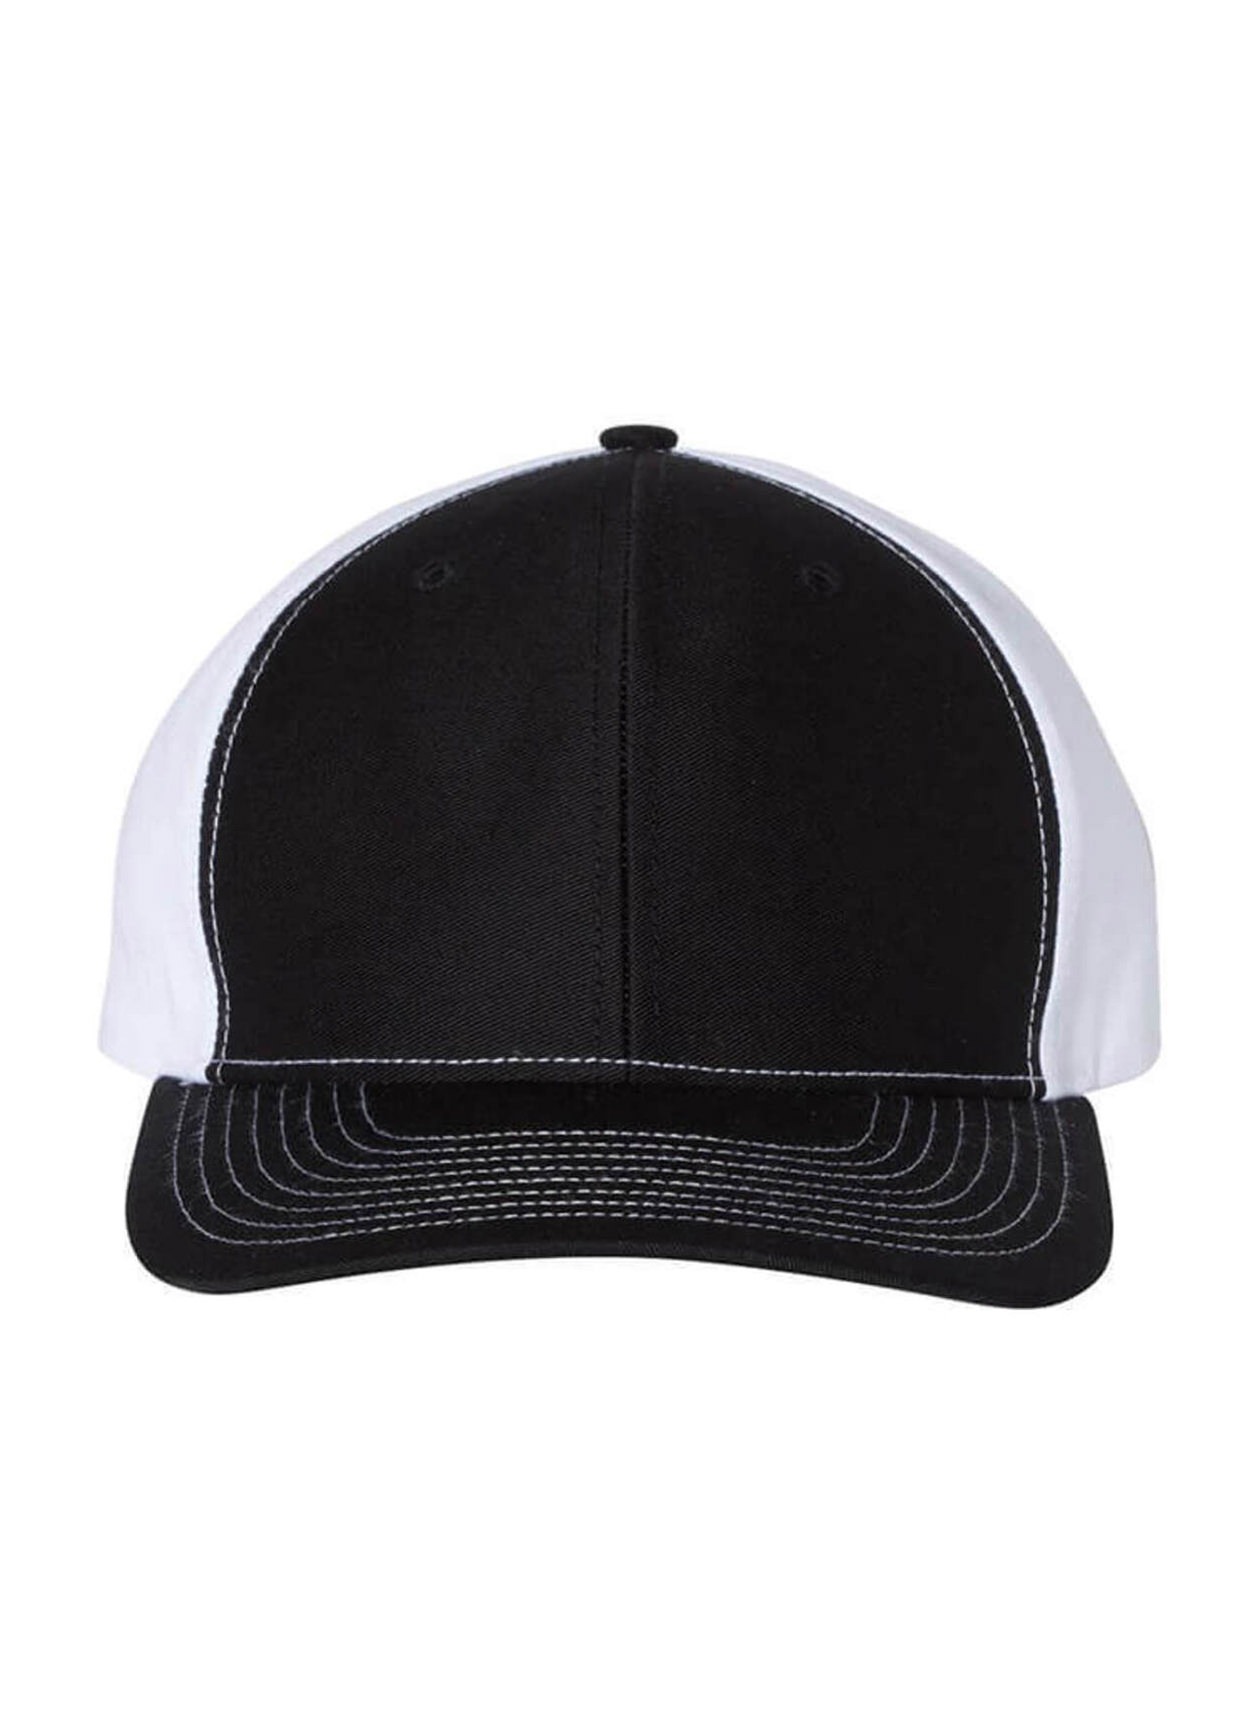 Richardson Richarson Twill Back Trucker Hat Black / White | Richardson